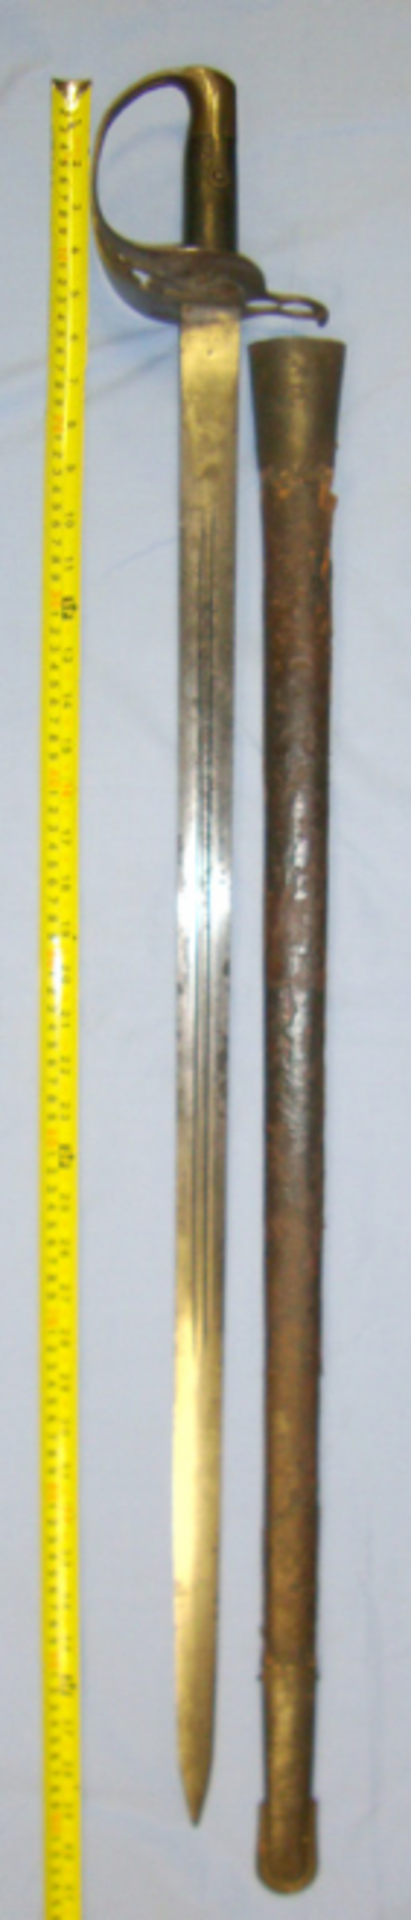 1859 Jacob Double Rifle Sword Bayonet No 23 & Original Scabbard.